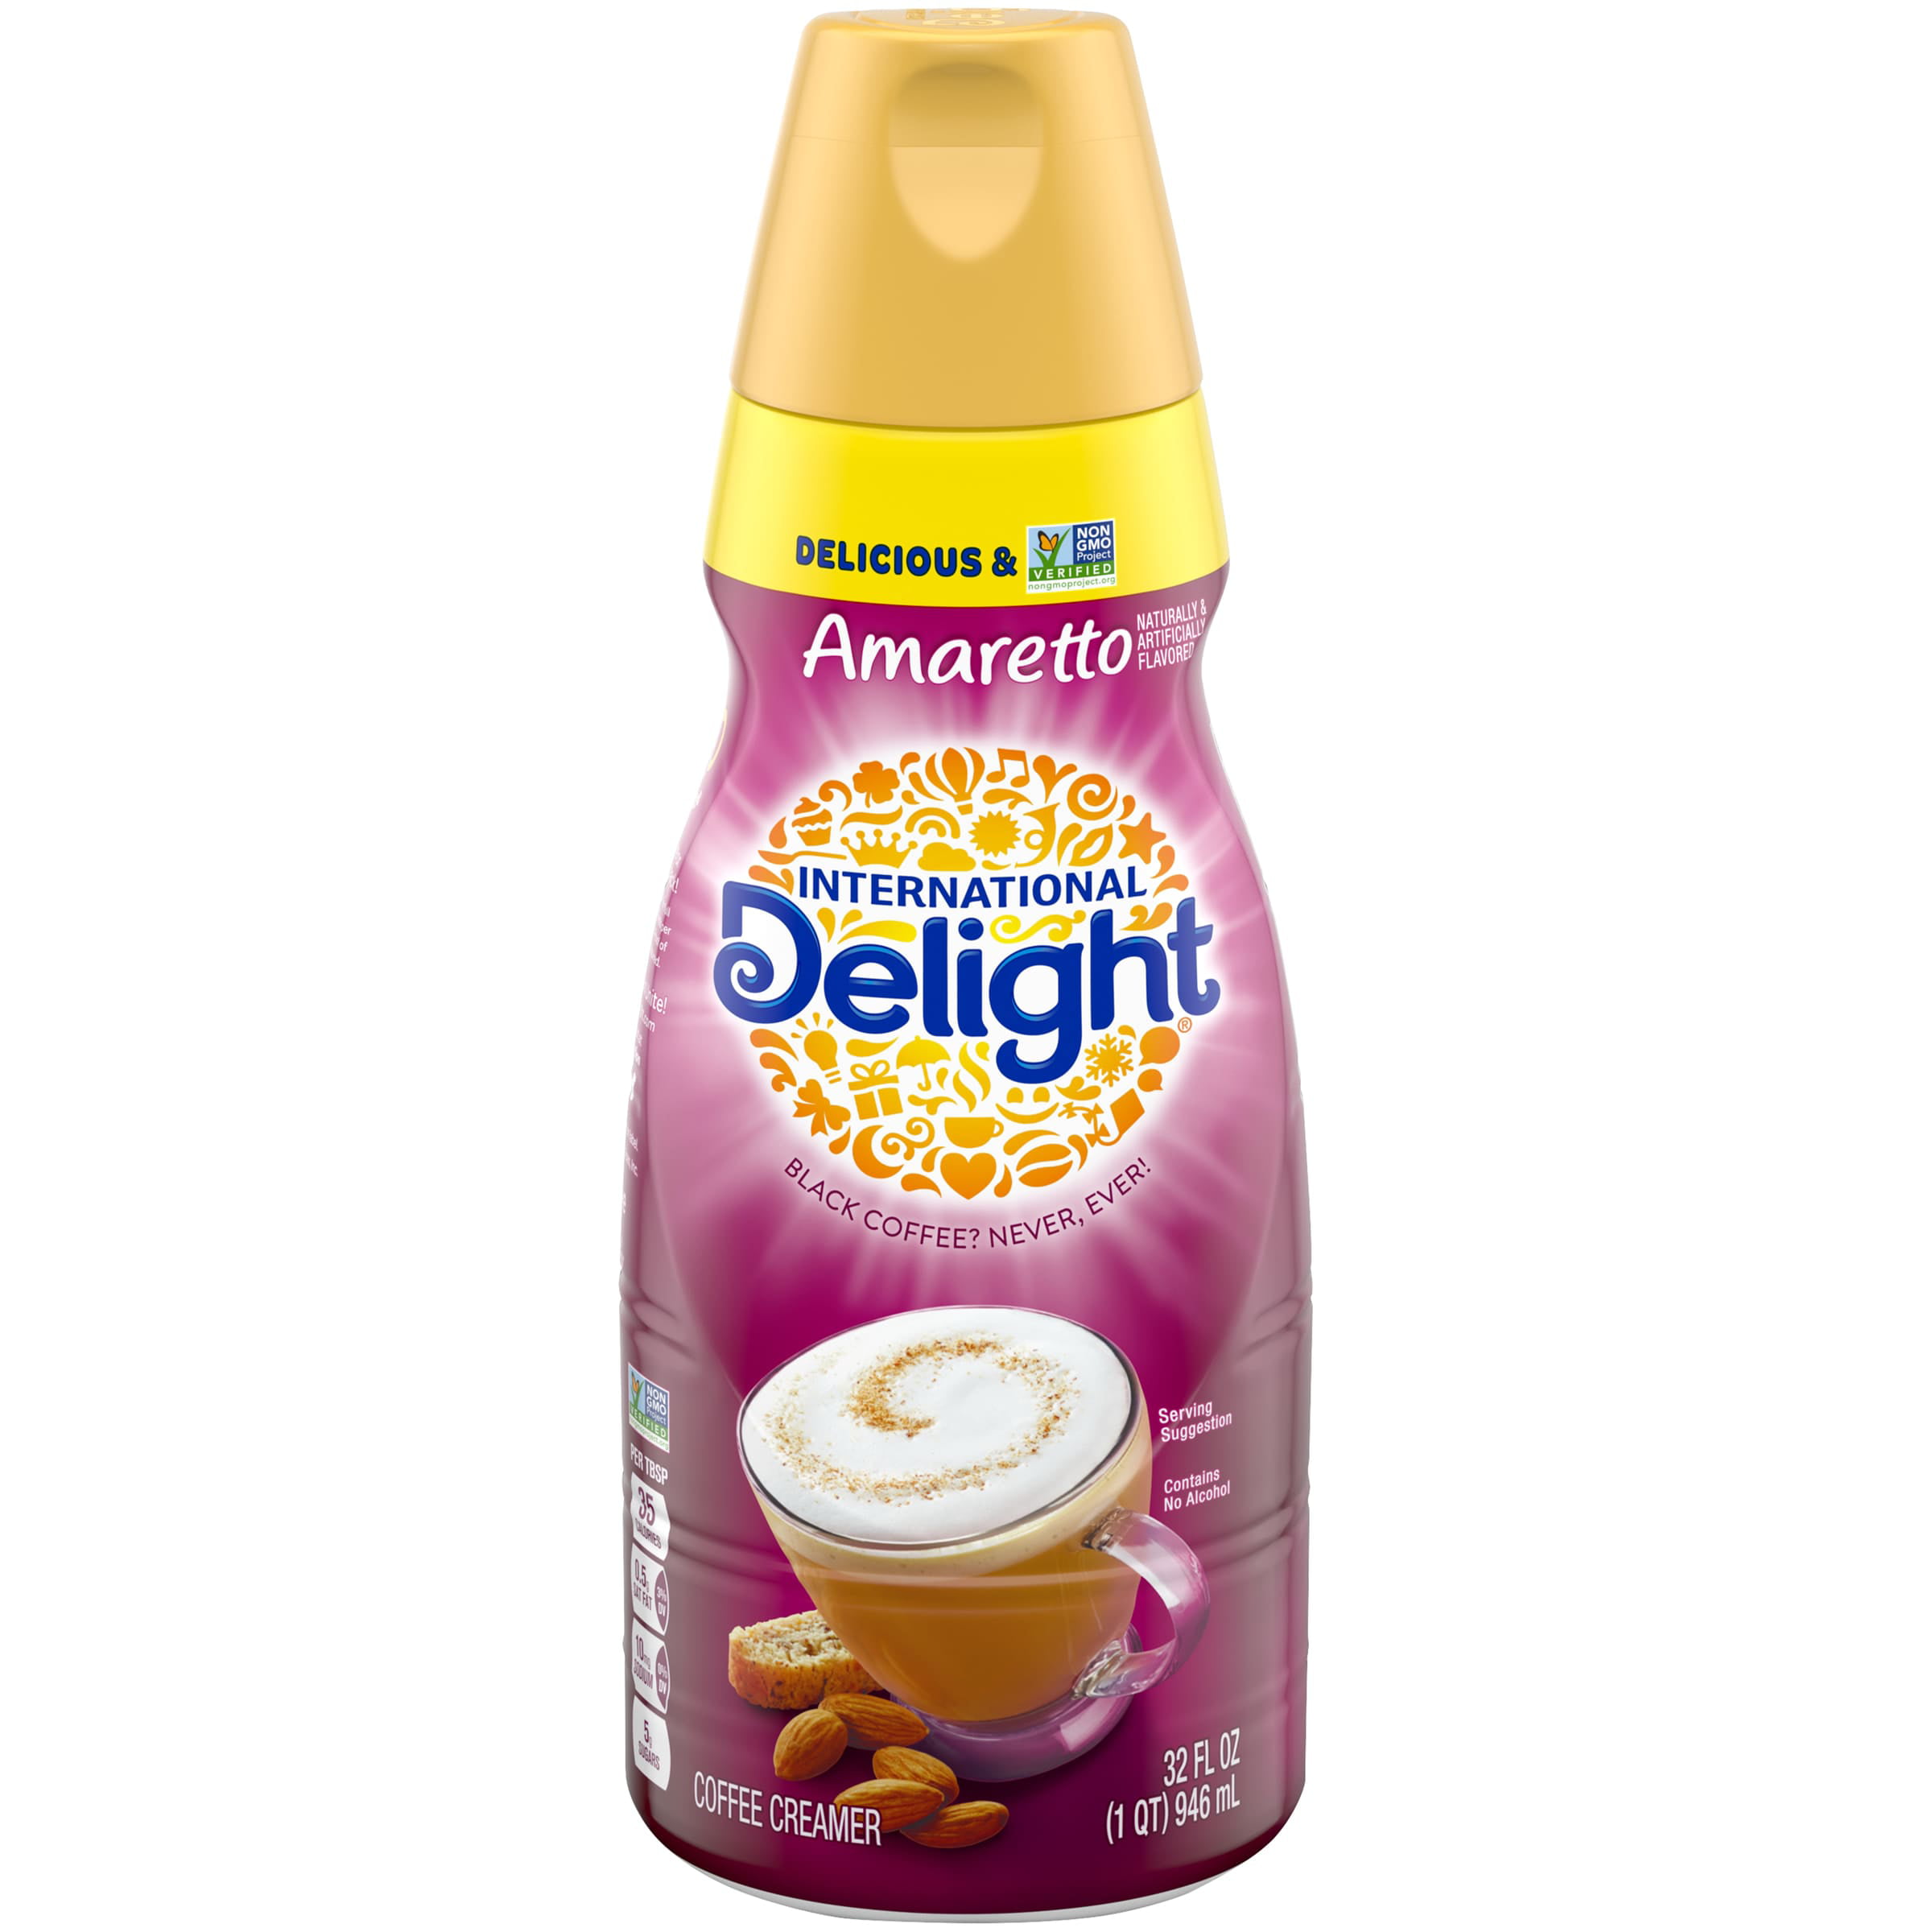 International Delight Coffee Creamer Shortage